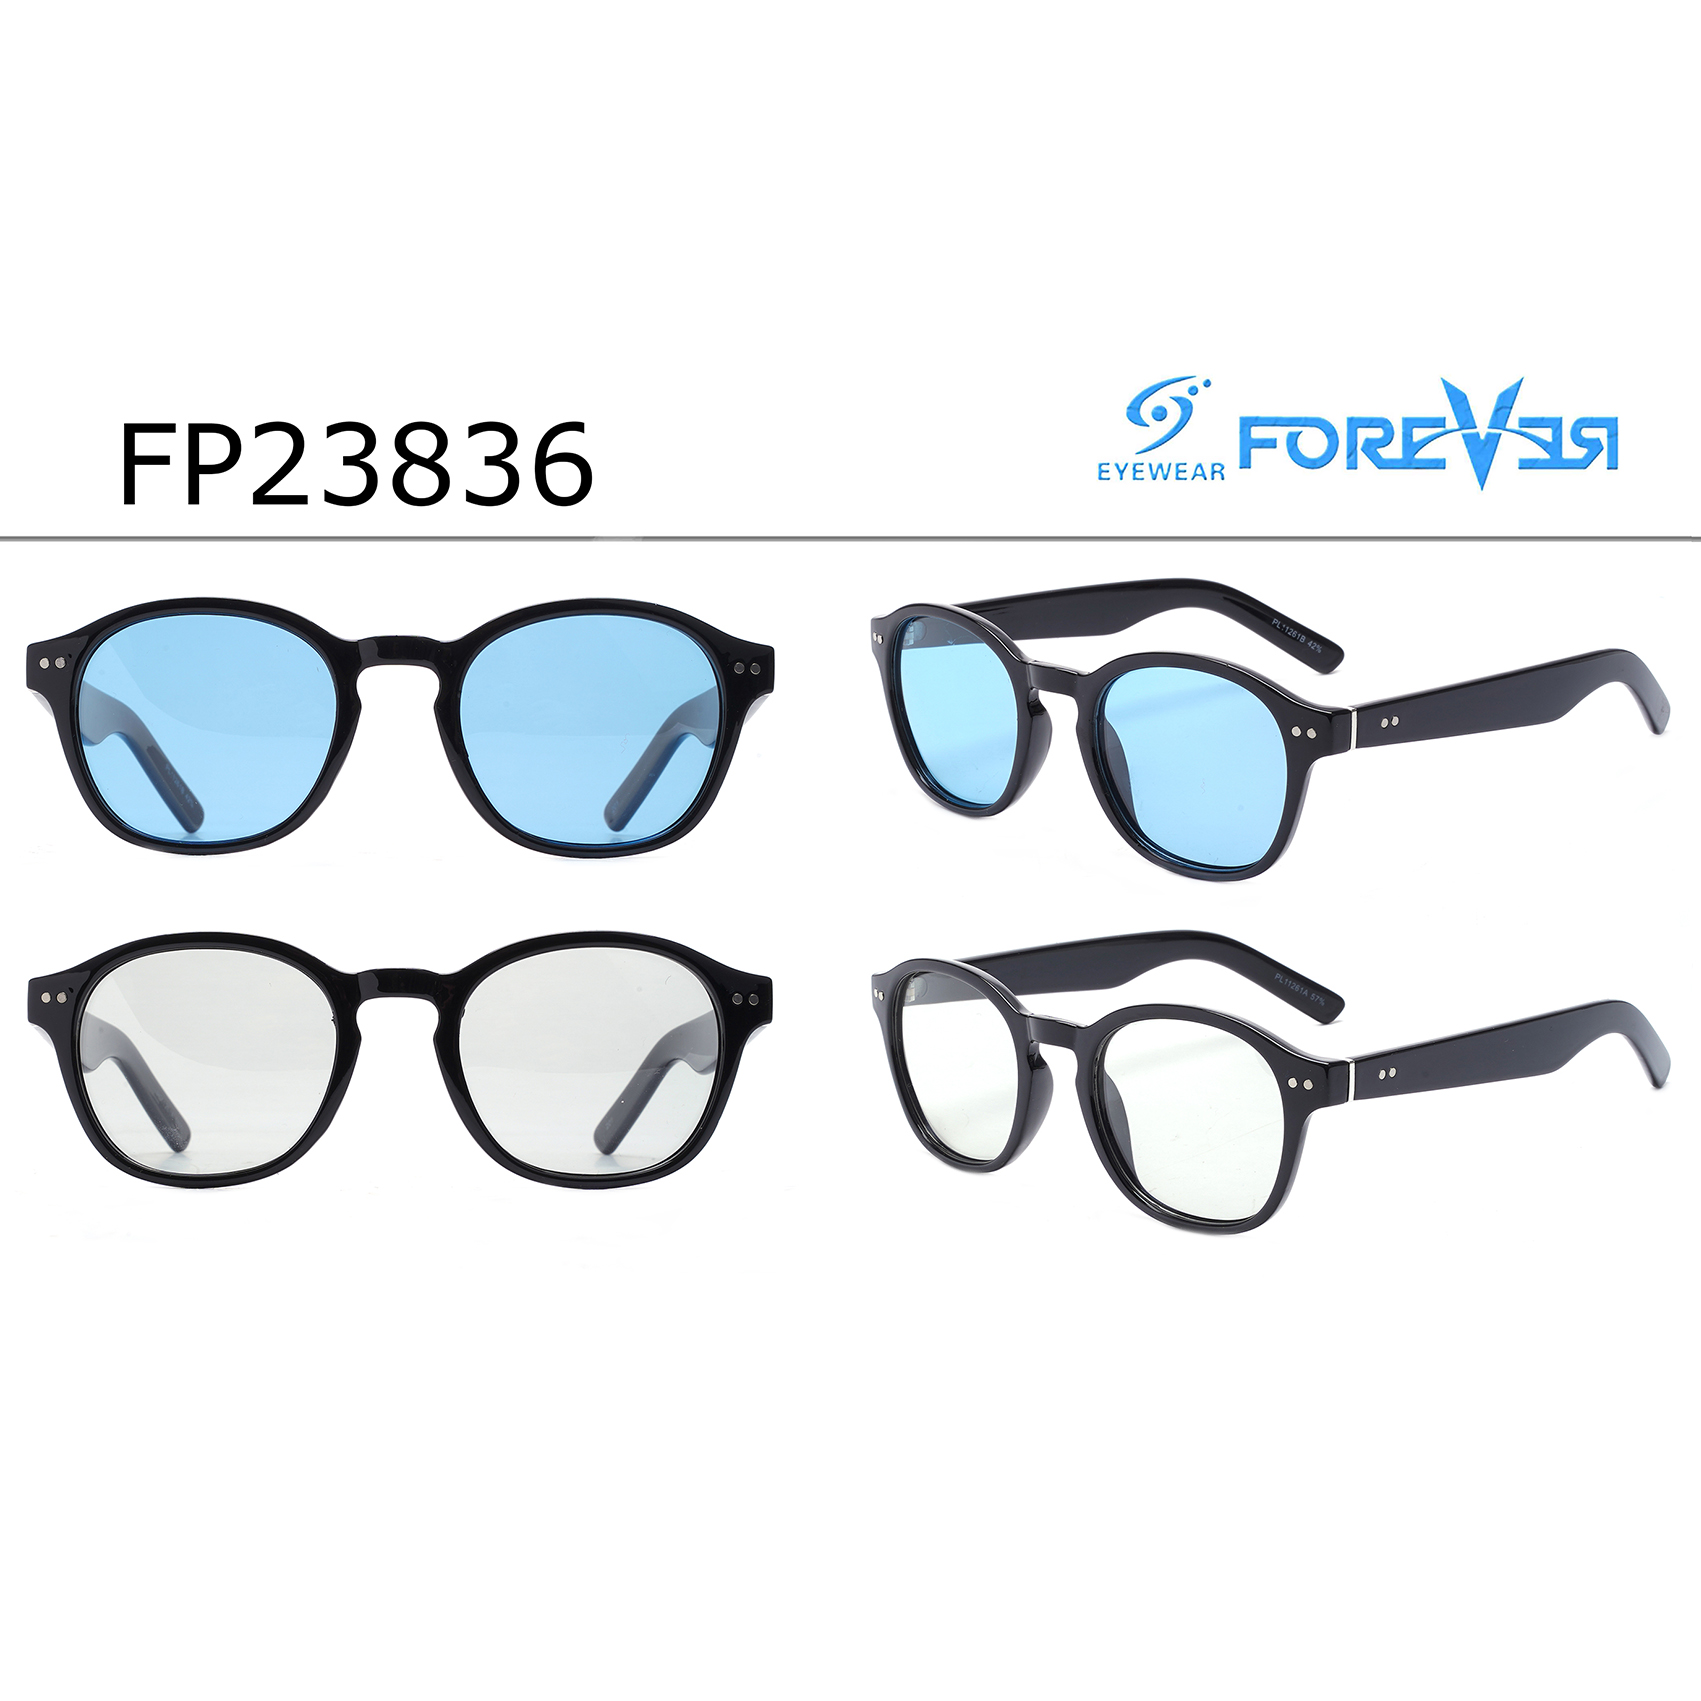 Stylish Black Frame Round Blue Lens Sunglasses Recycled Plastic Sunglasses